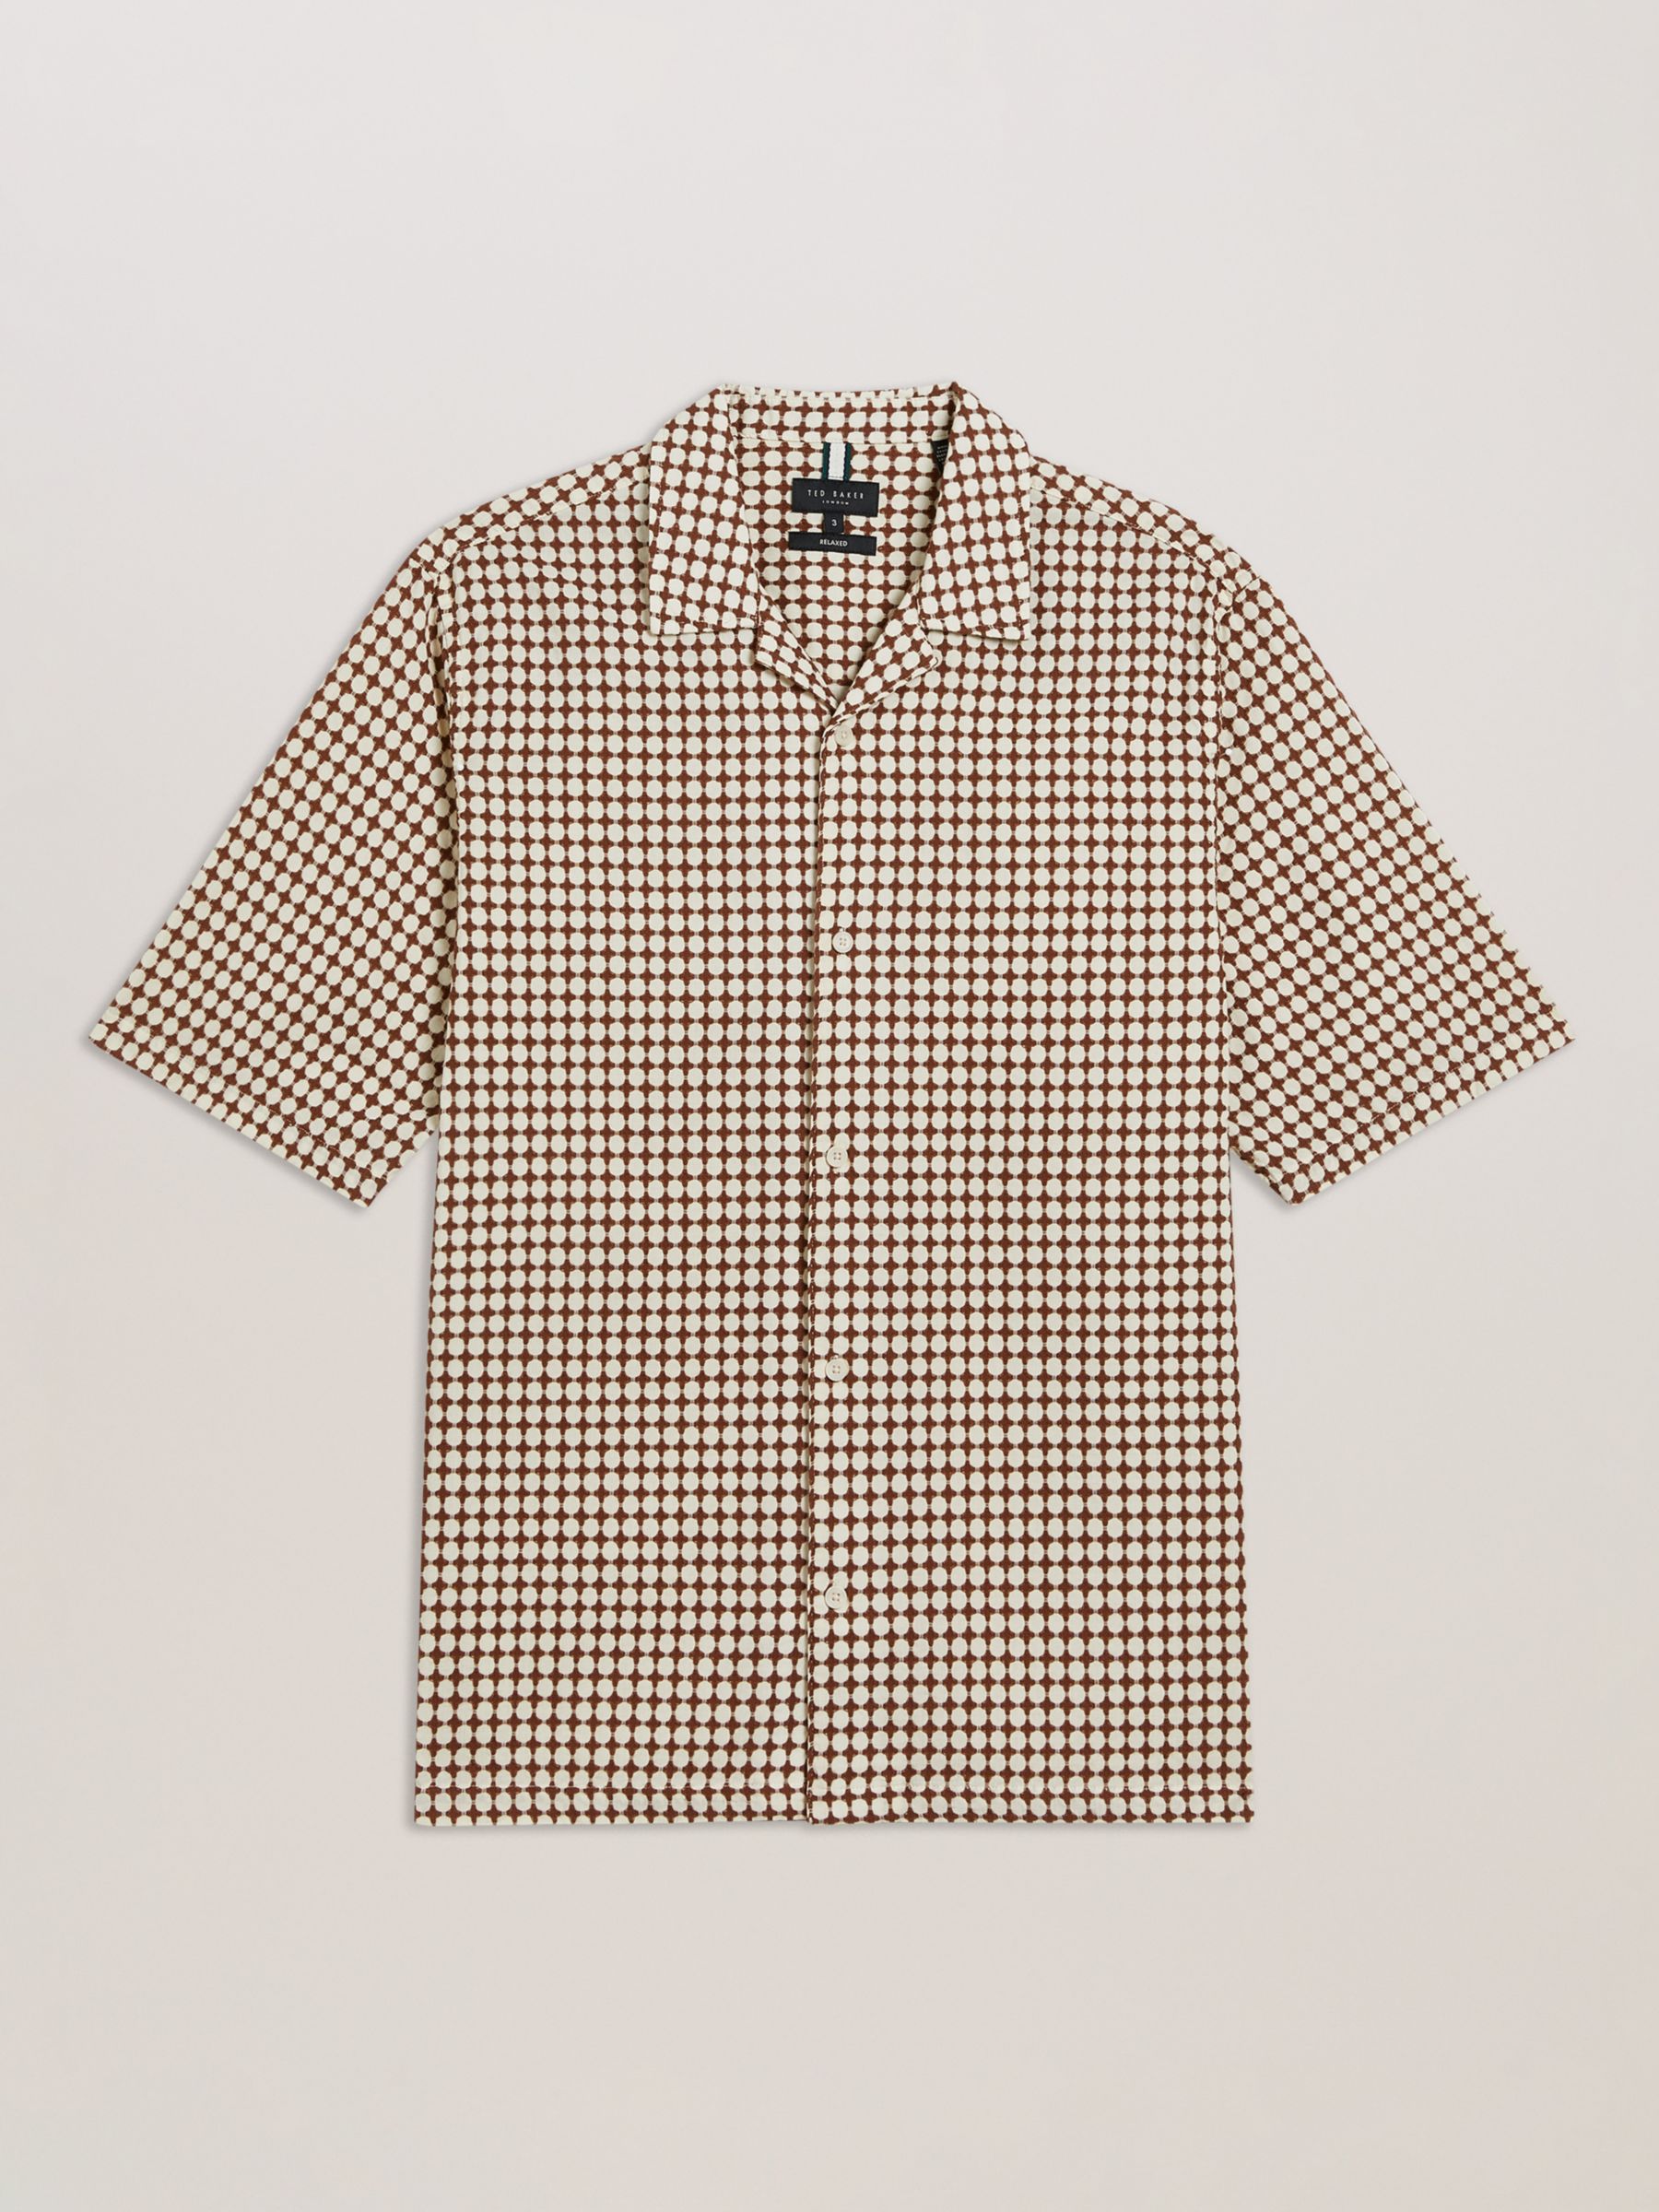 Ted Baker Oise Textured Geometric Print Shirt, Brown/Multi, XL